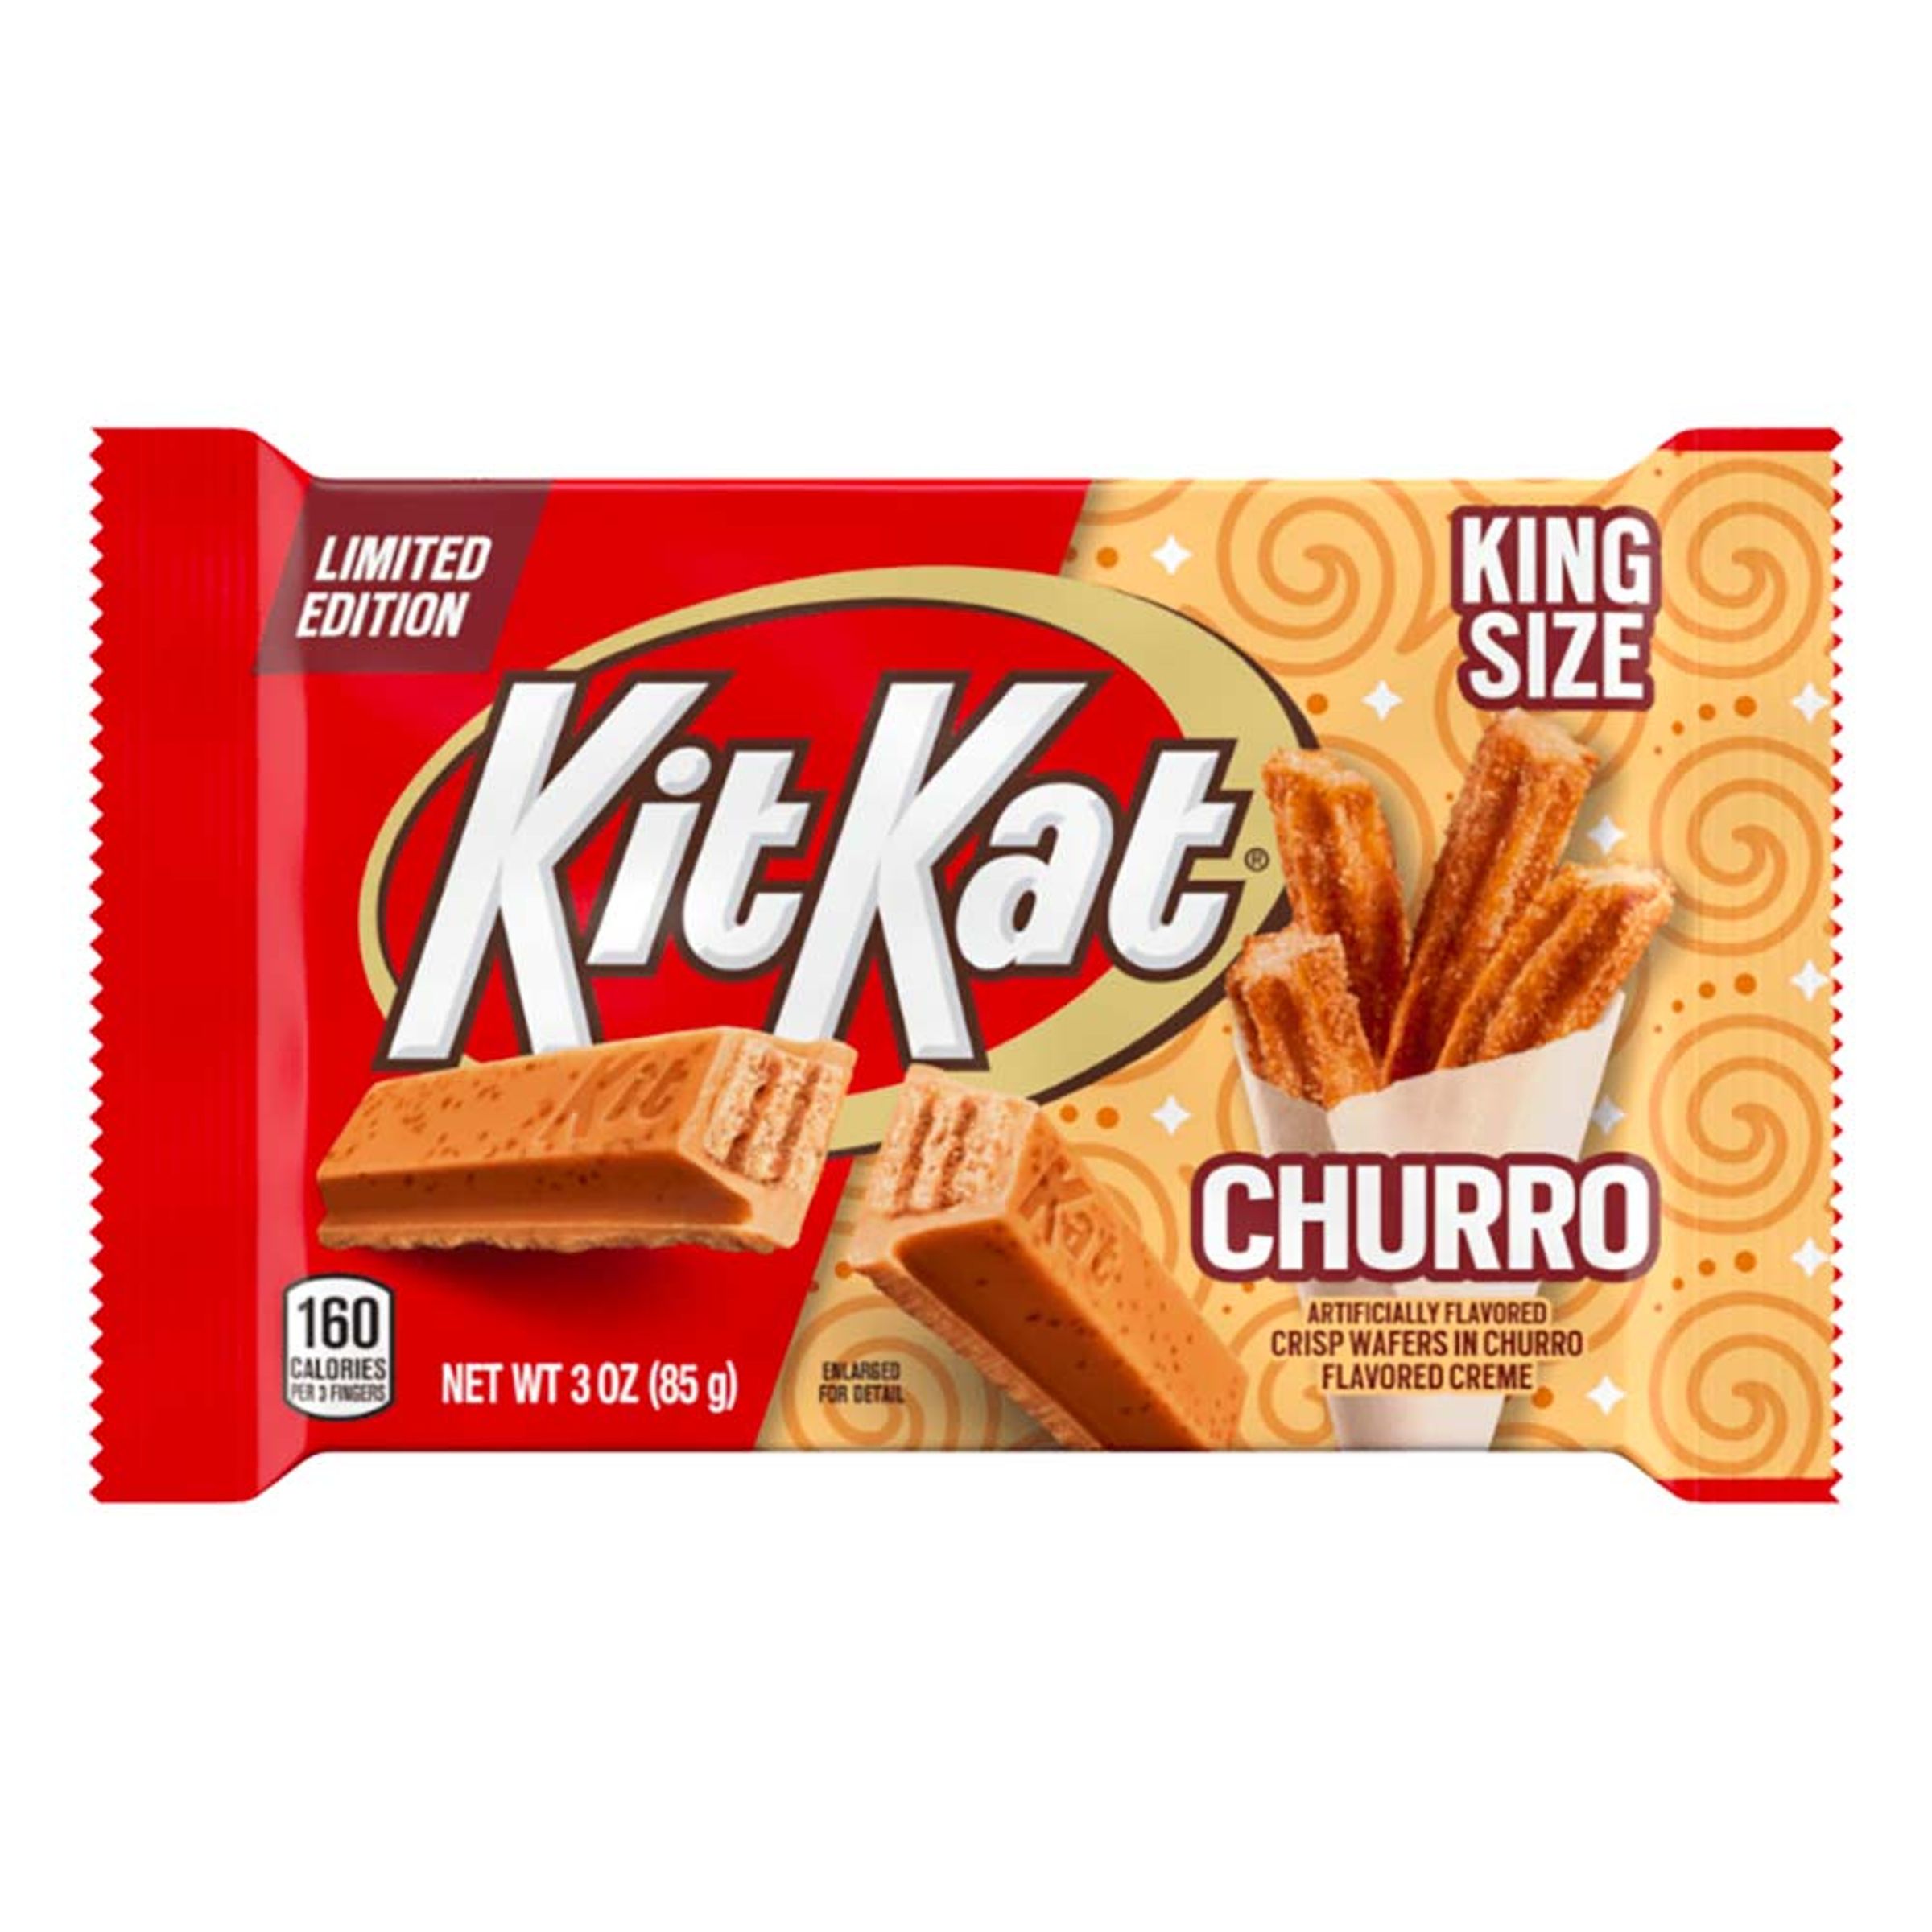 KitKat Churro King Size - 85 gram